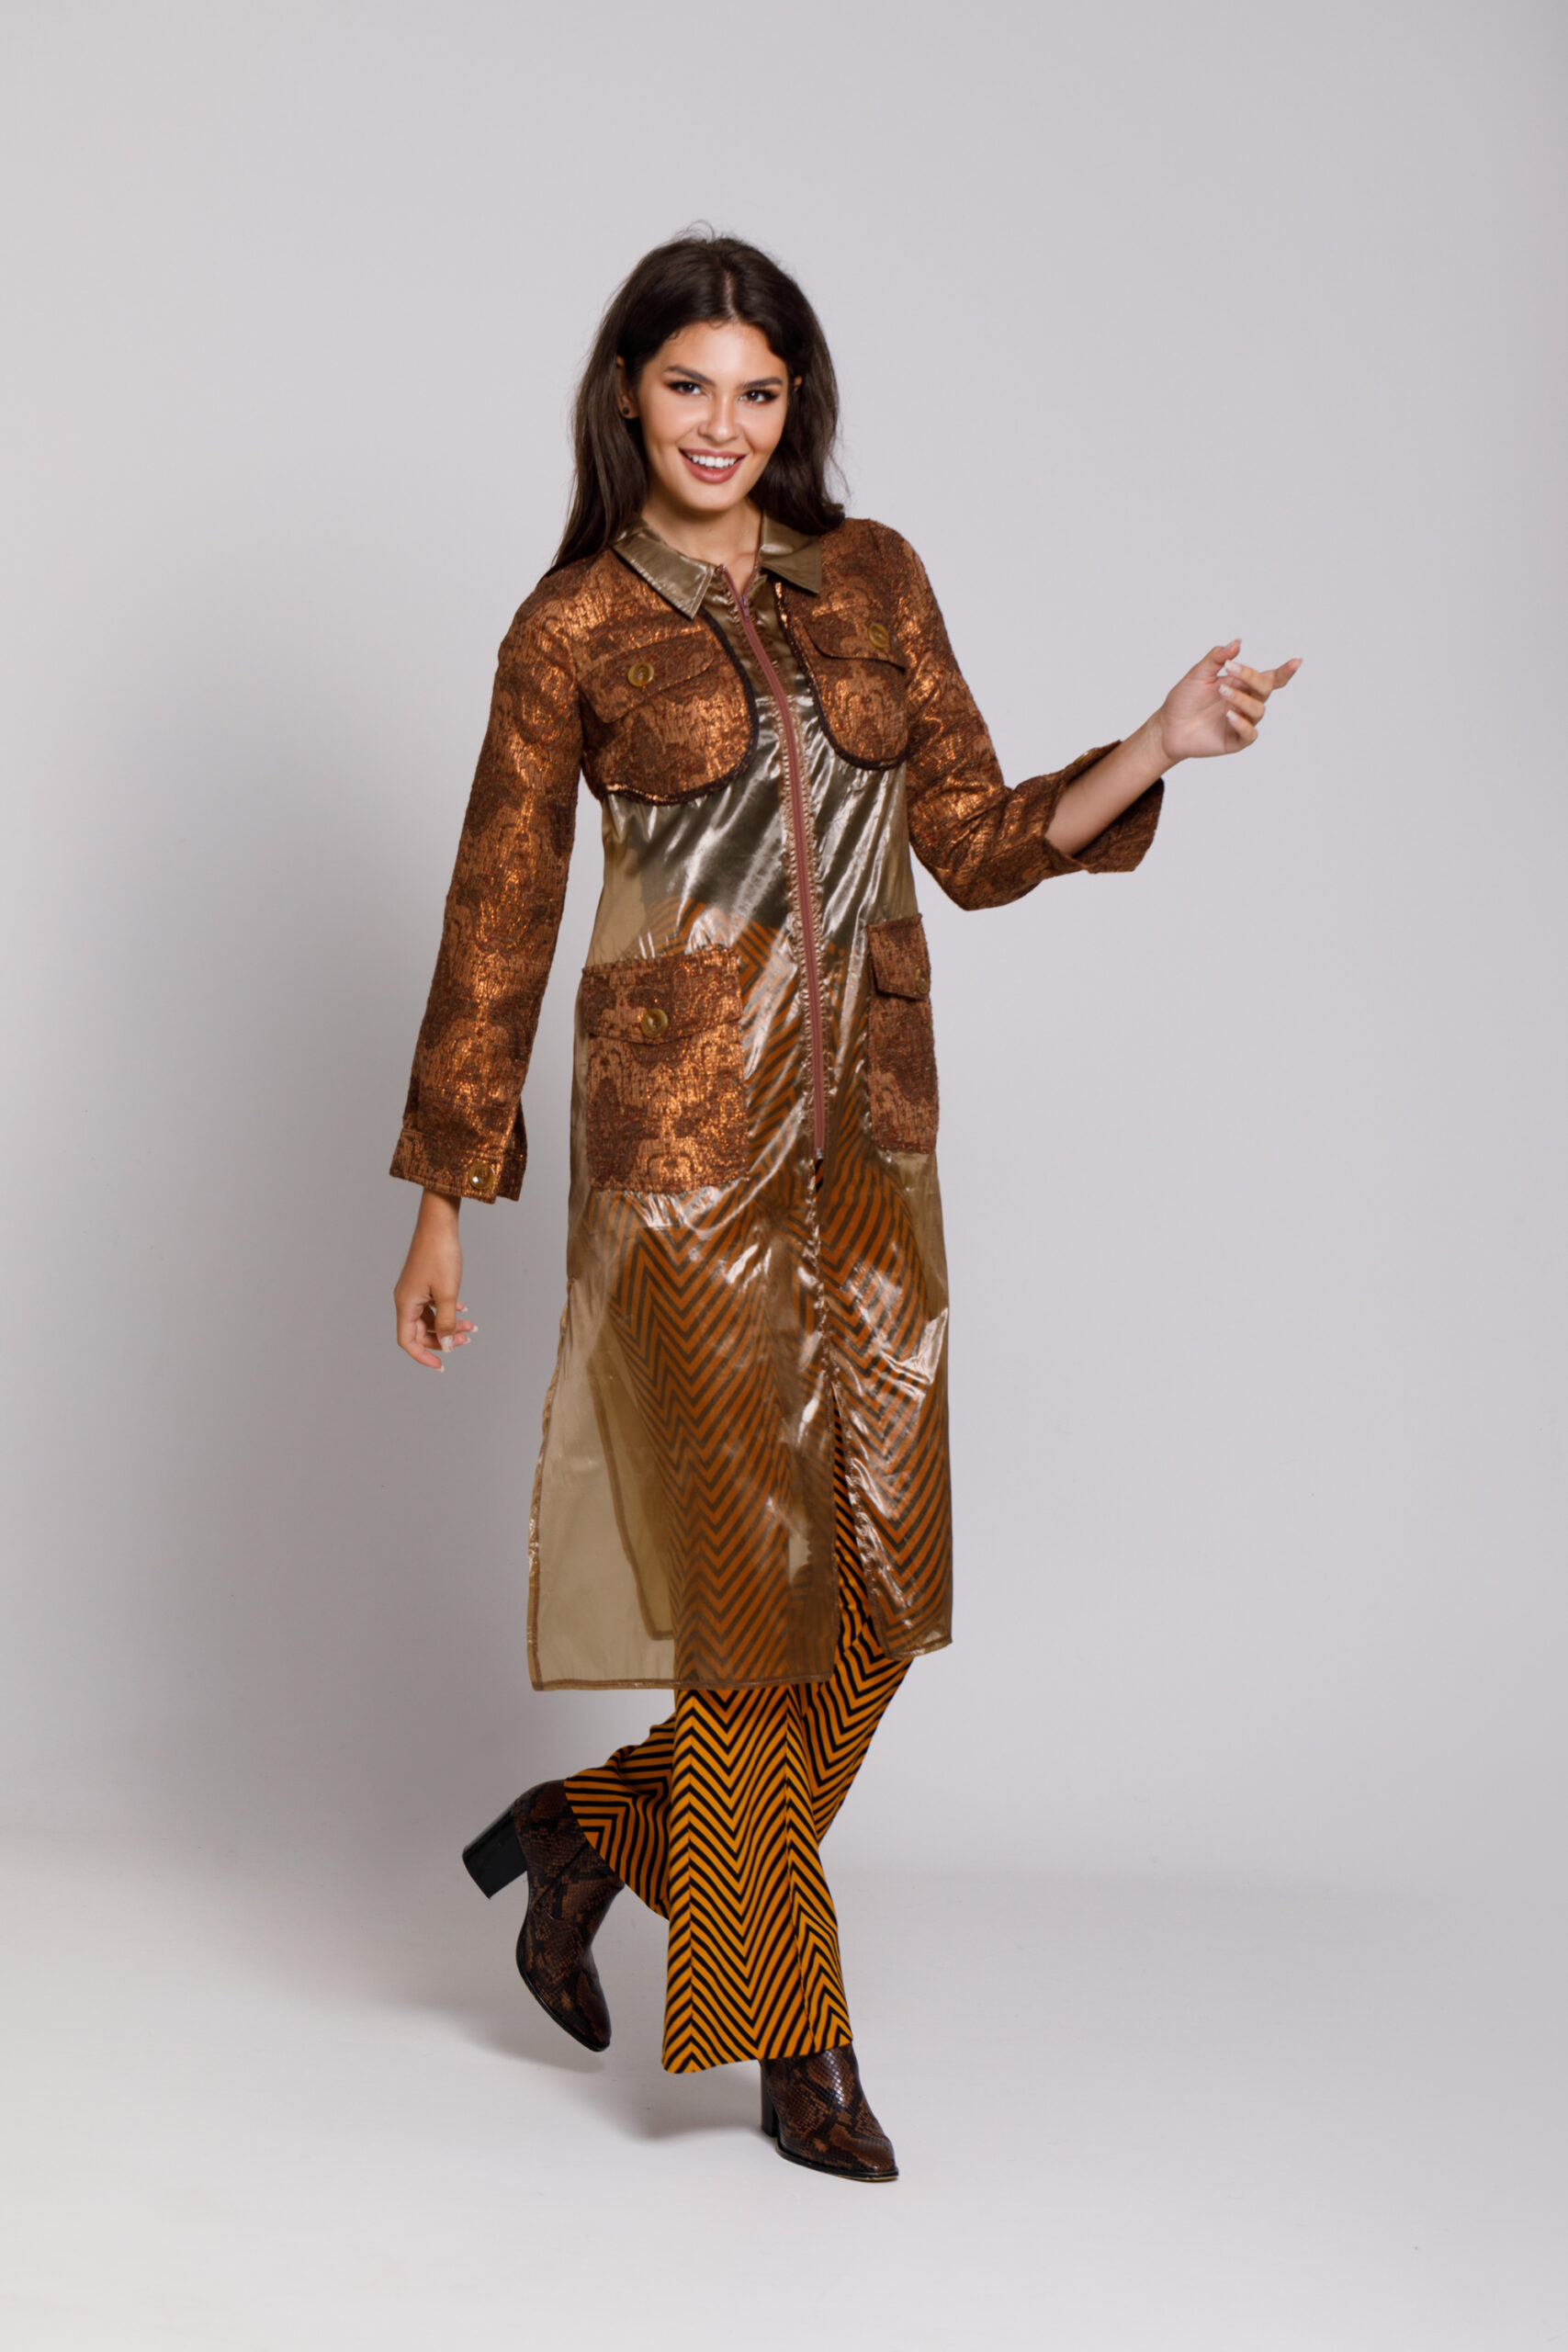 DORIS casual in copper brocade and organza Jacket. Natural fabrics, original design, handmade embroidery